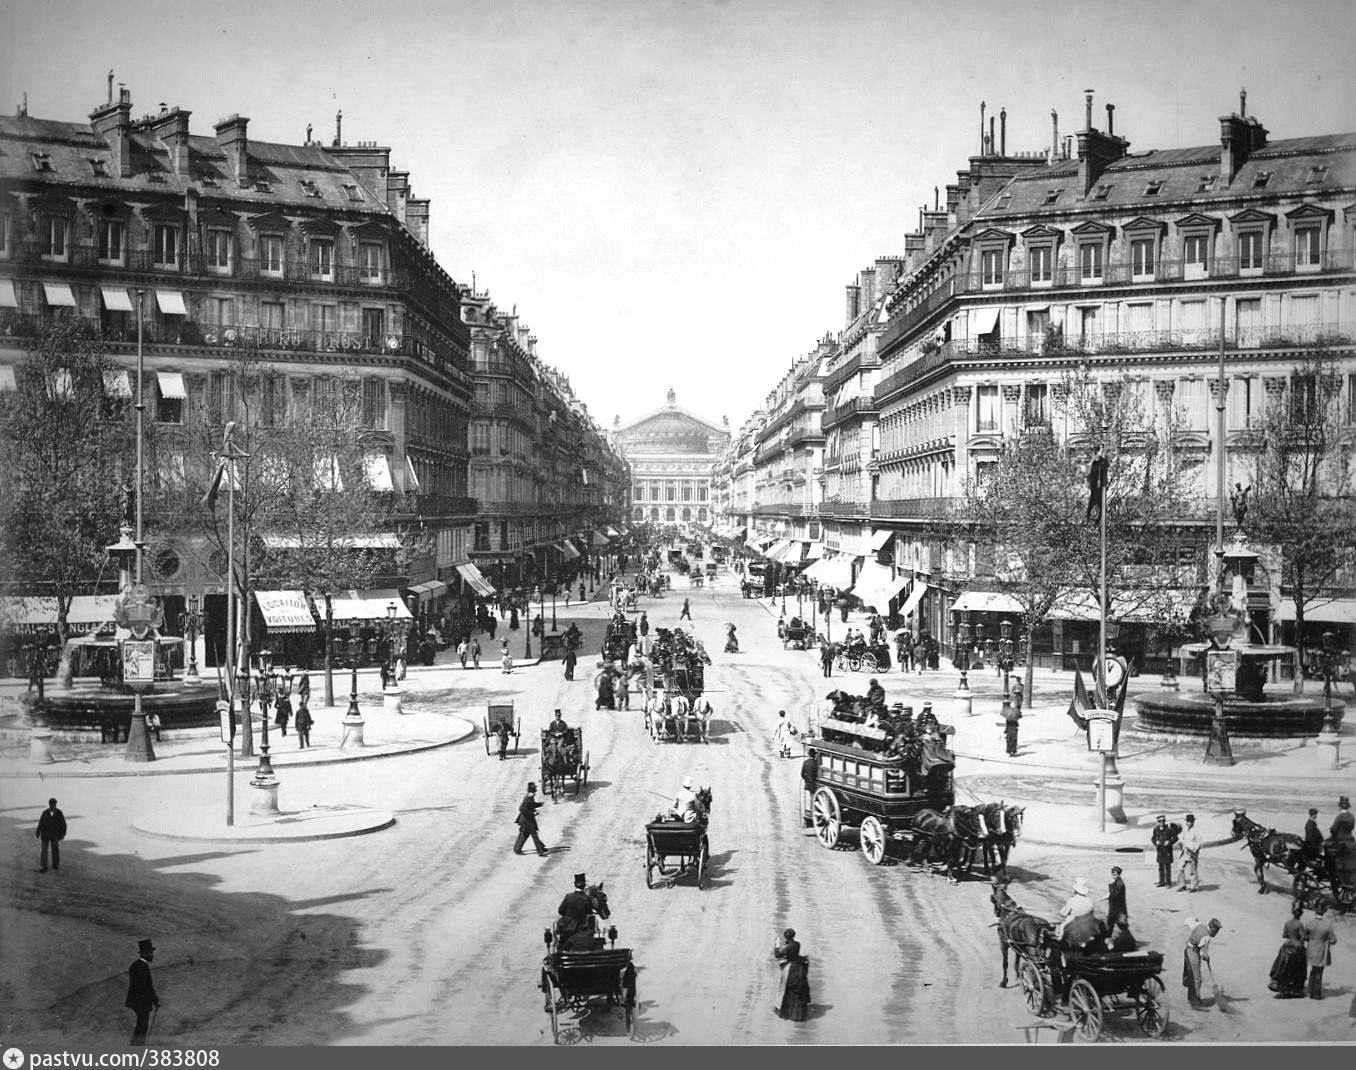 Века париж. Бульвар сен-Жермен в Париже 19 век. Париж 1900 год. Гранд отель Франция 19 век. Старый Париж 19 век.